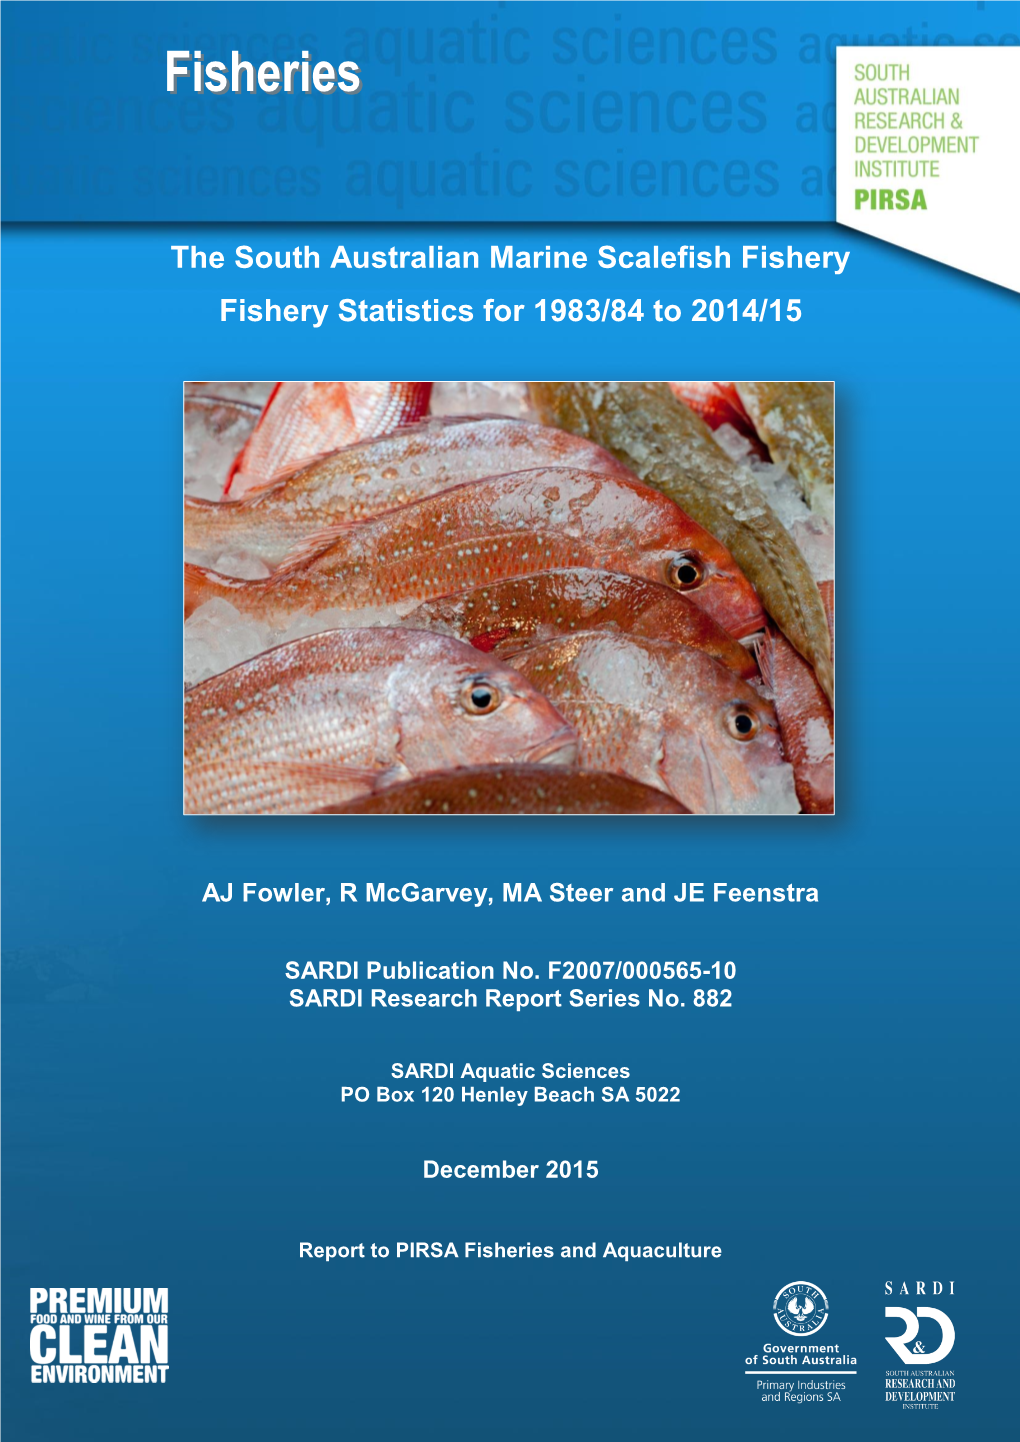 The South Australian Marine Scalefish Fishery Fishery Statistics for 1983/84 to 2014/15